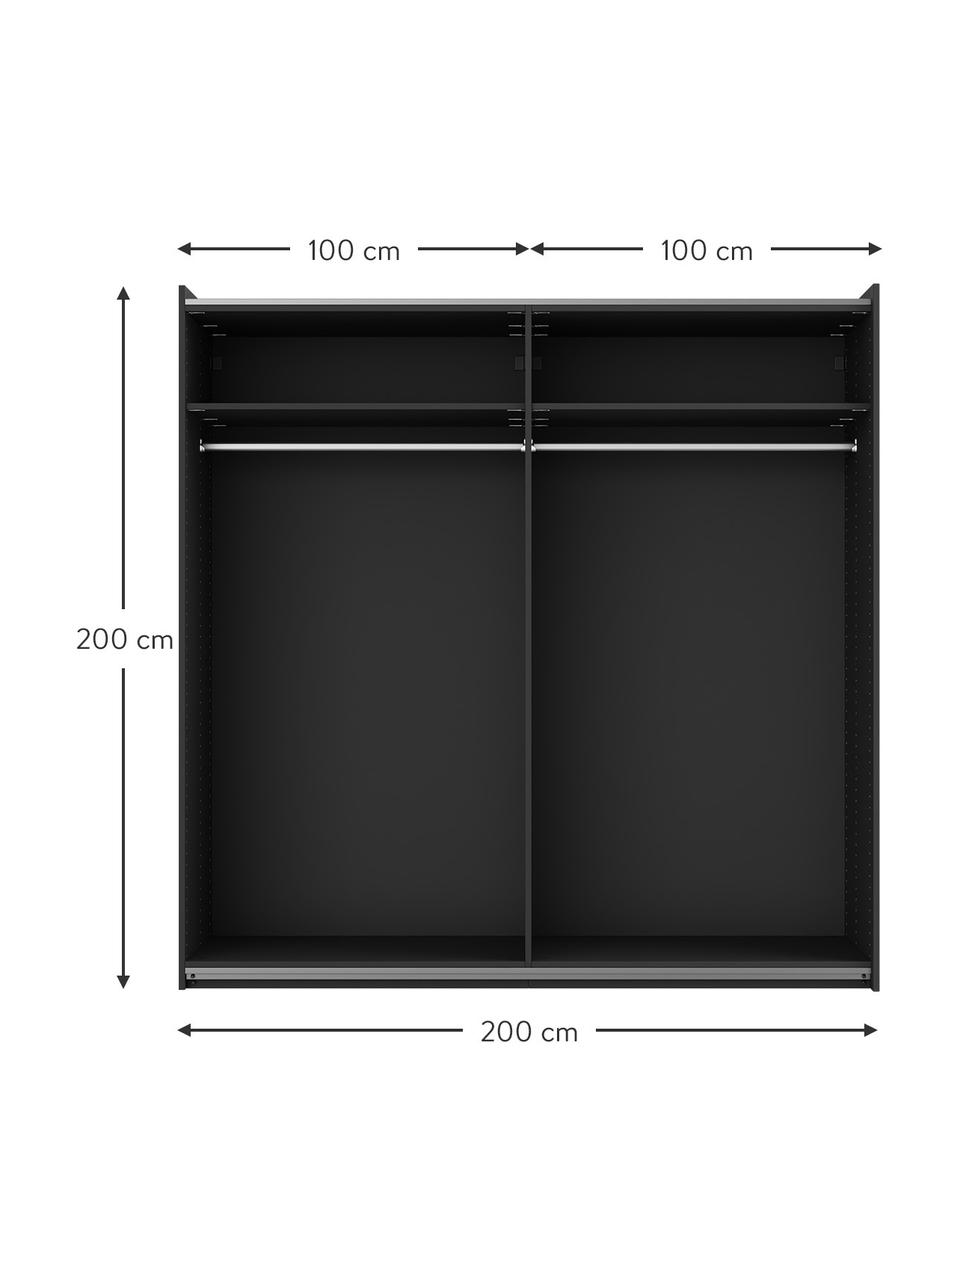 Modulaire schuifdeurkast Leon, 200 cm breed, diverse varianten, Zwart, Basis interieur, B 200 x H 200 cm